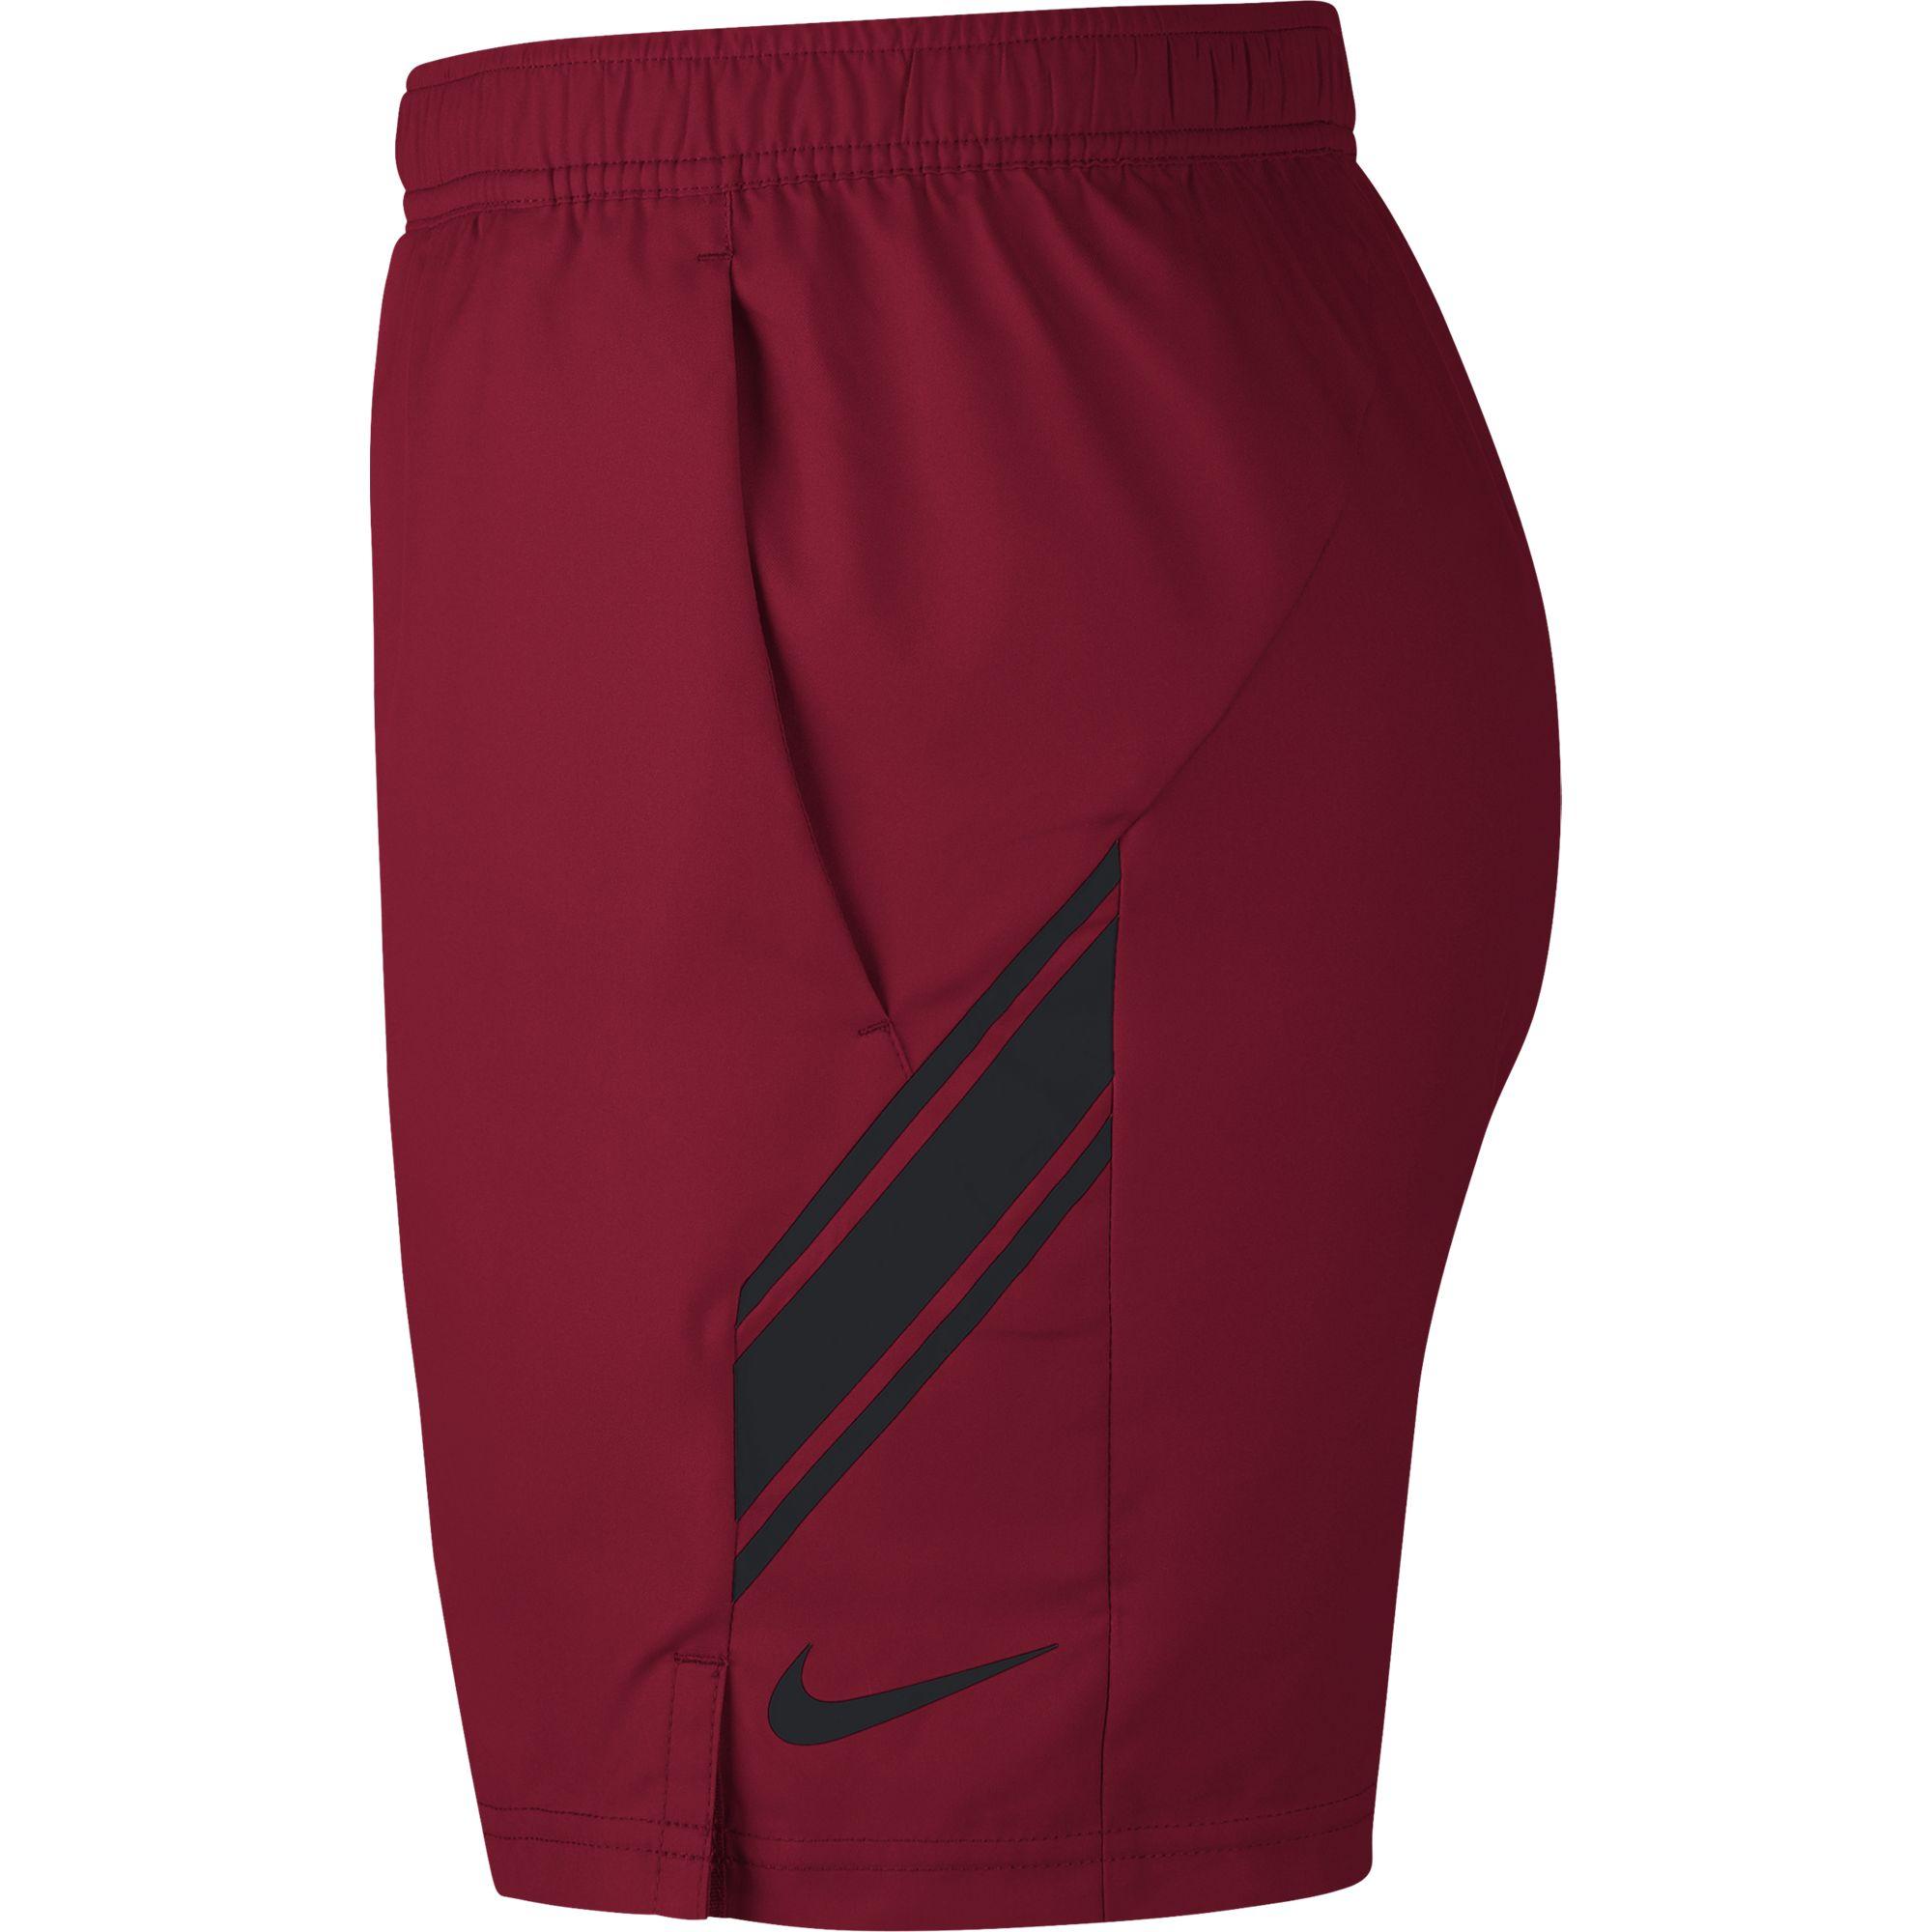 Nike Mens Dri-FIT 7 Inch Tennis Shorts - Team Crimson/Black ...